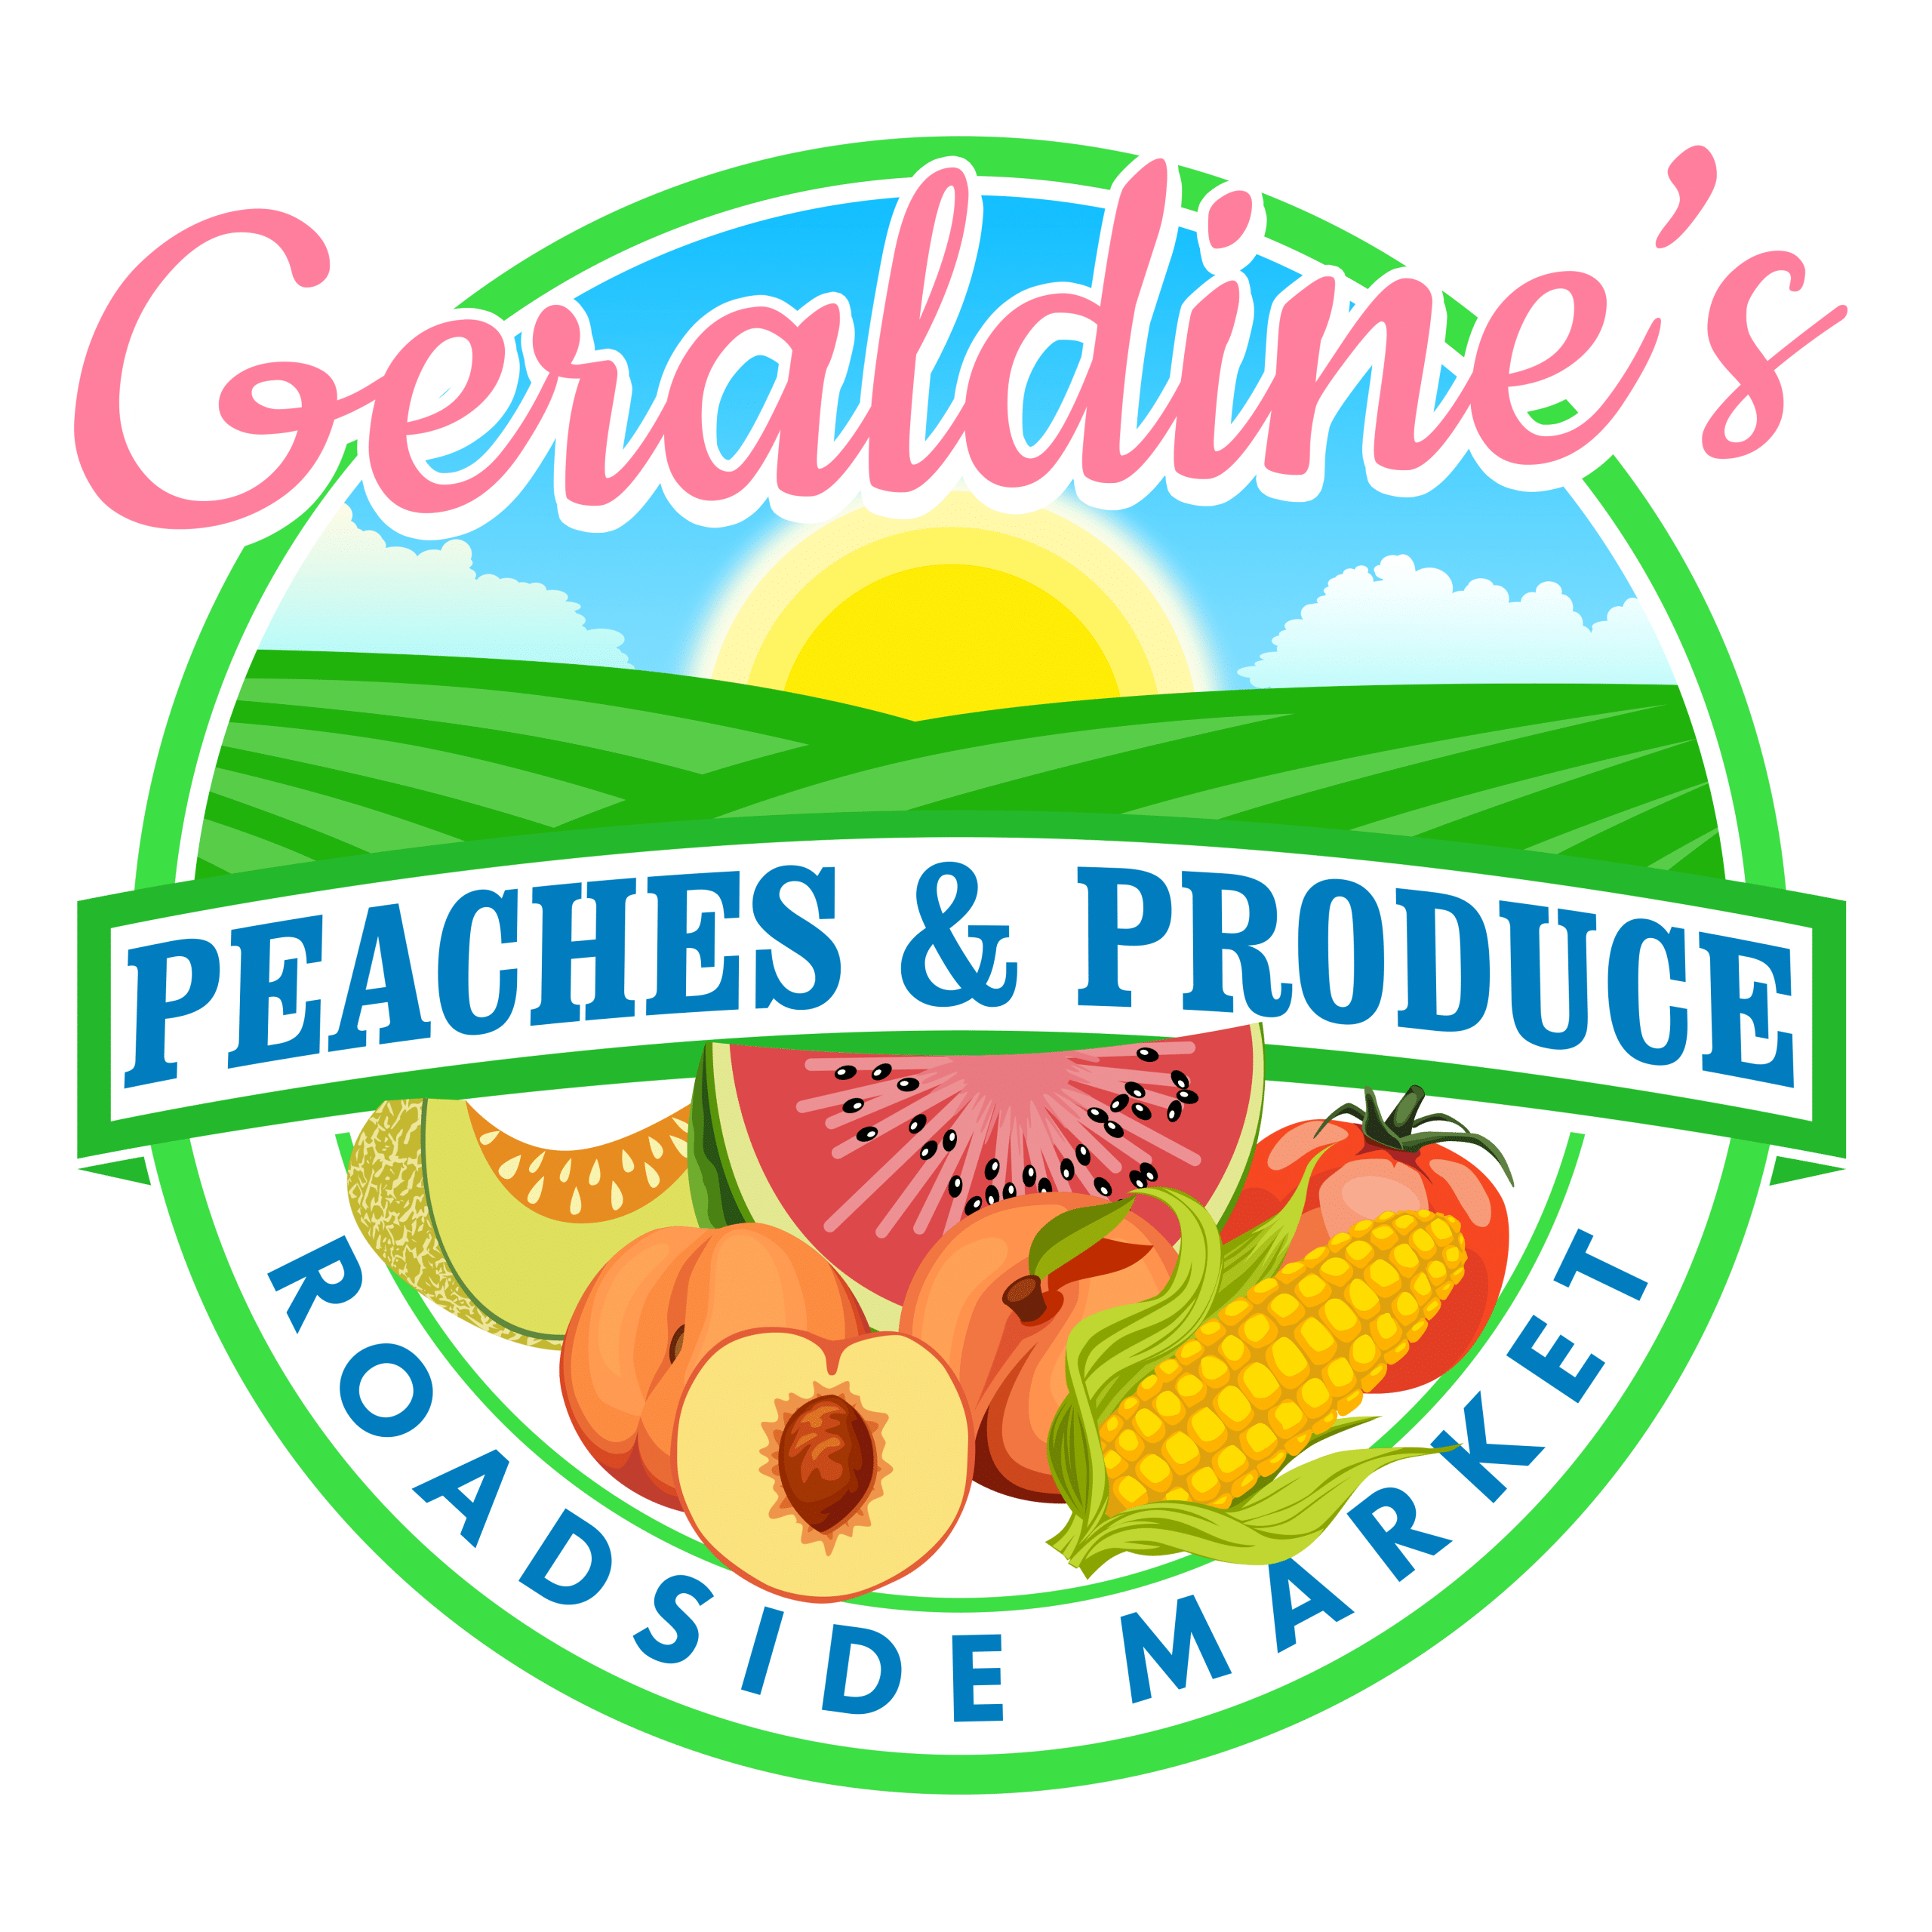 Geraldine's Peaches and Produce